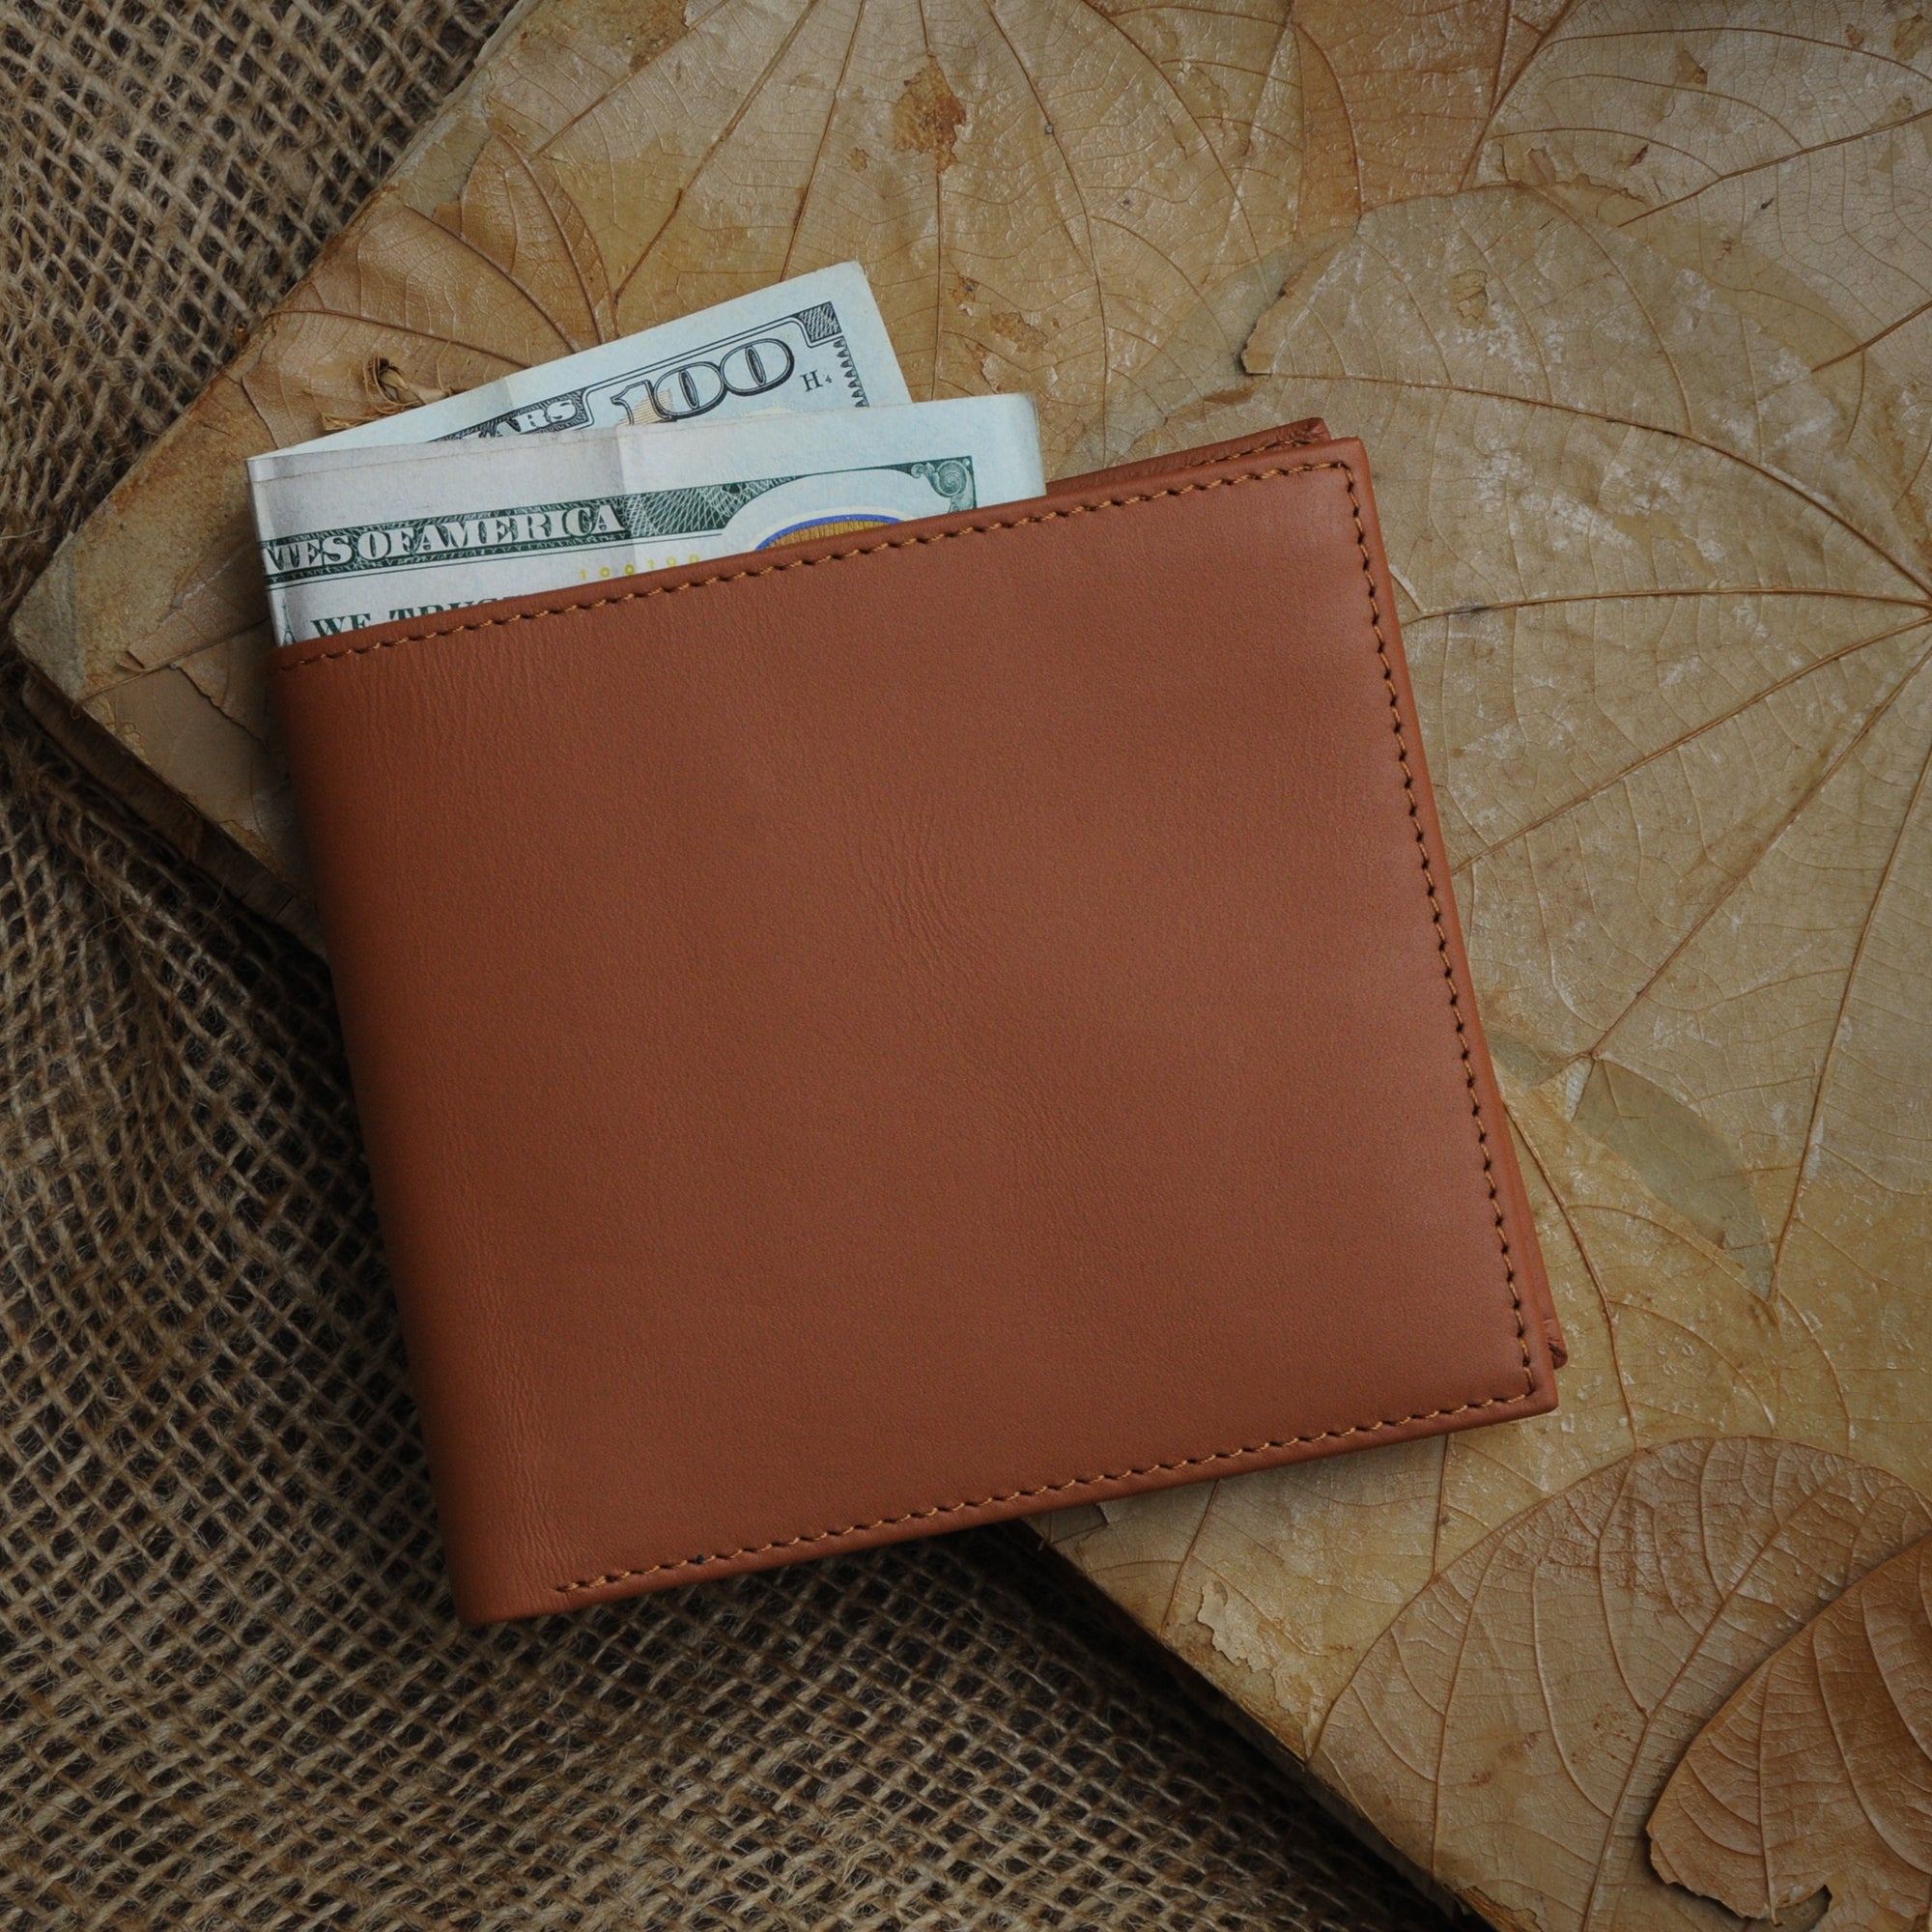 Soft Klasik cüzdan-Taba